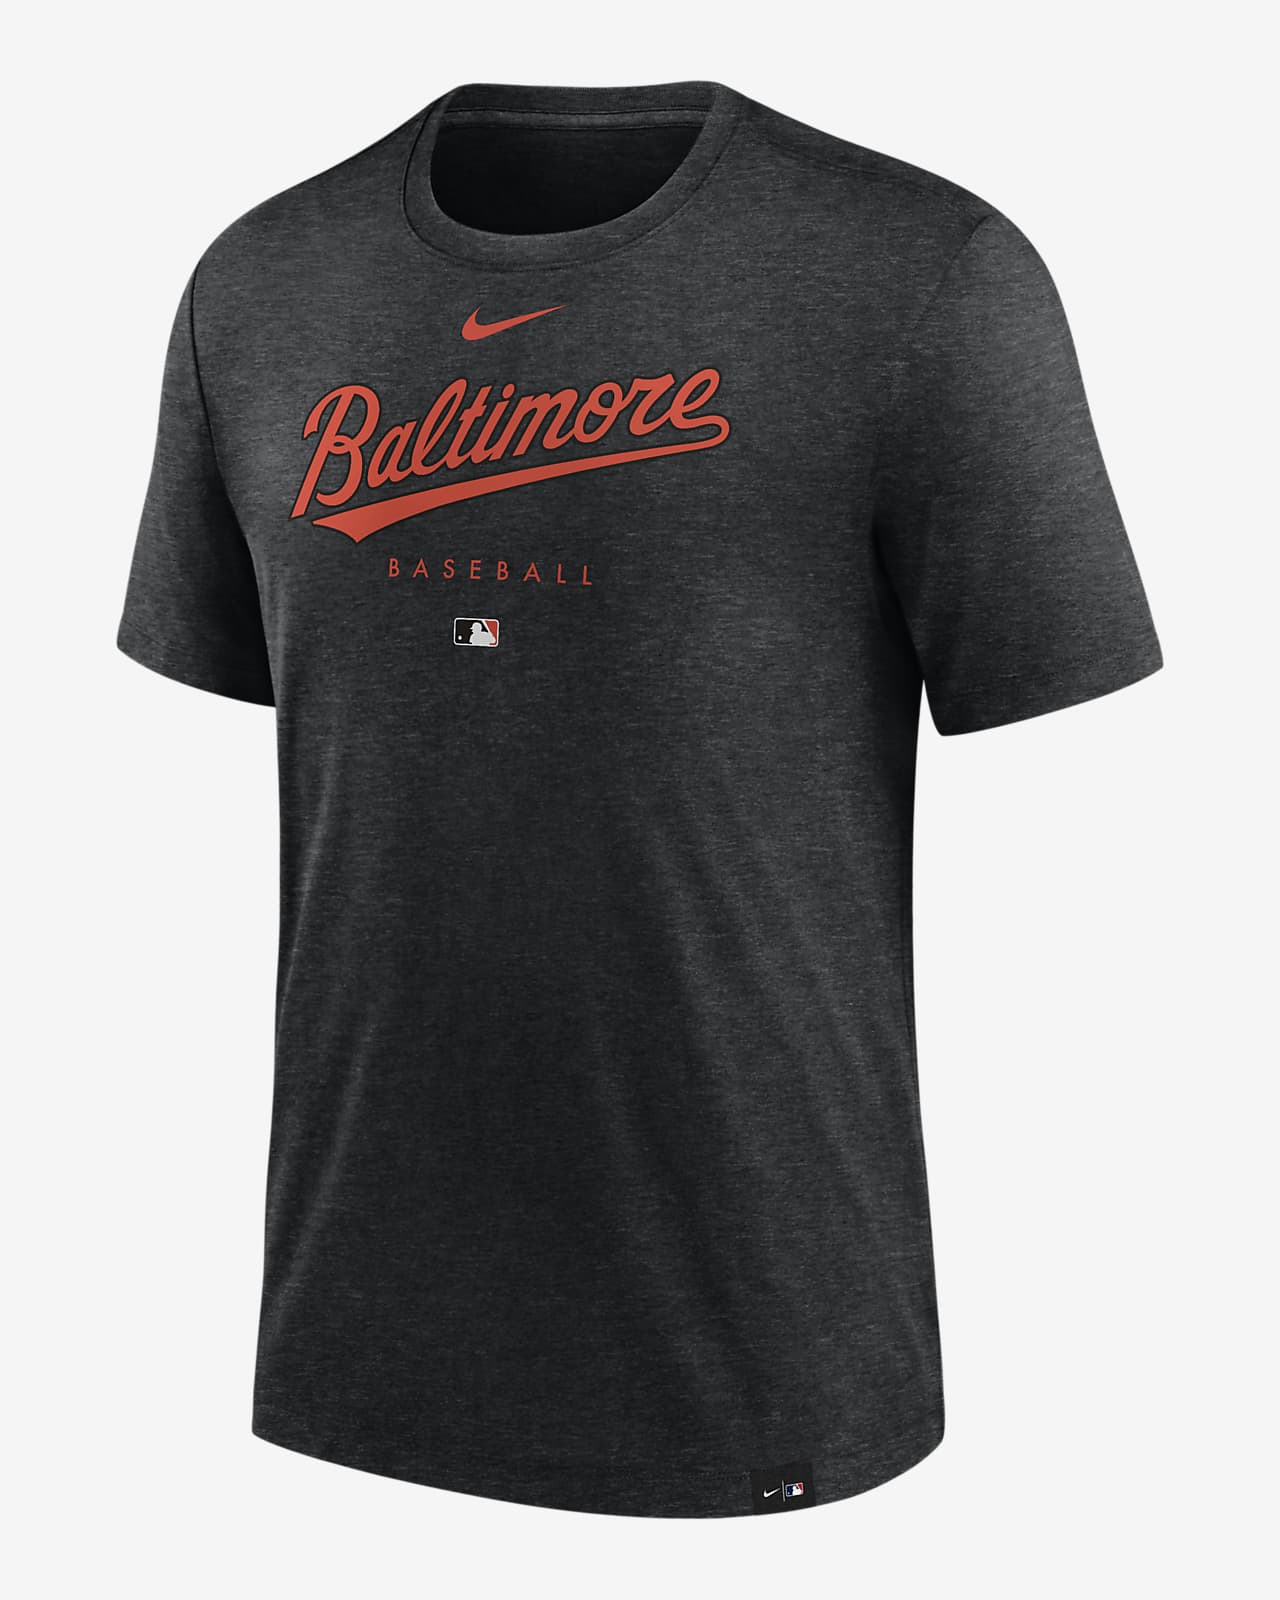 Men's Nike Black/Orange Baltimore Orioles Authentic Collection